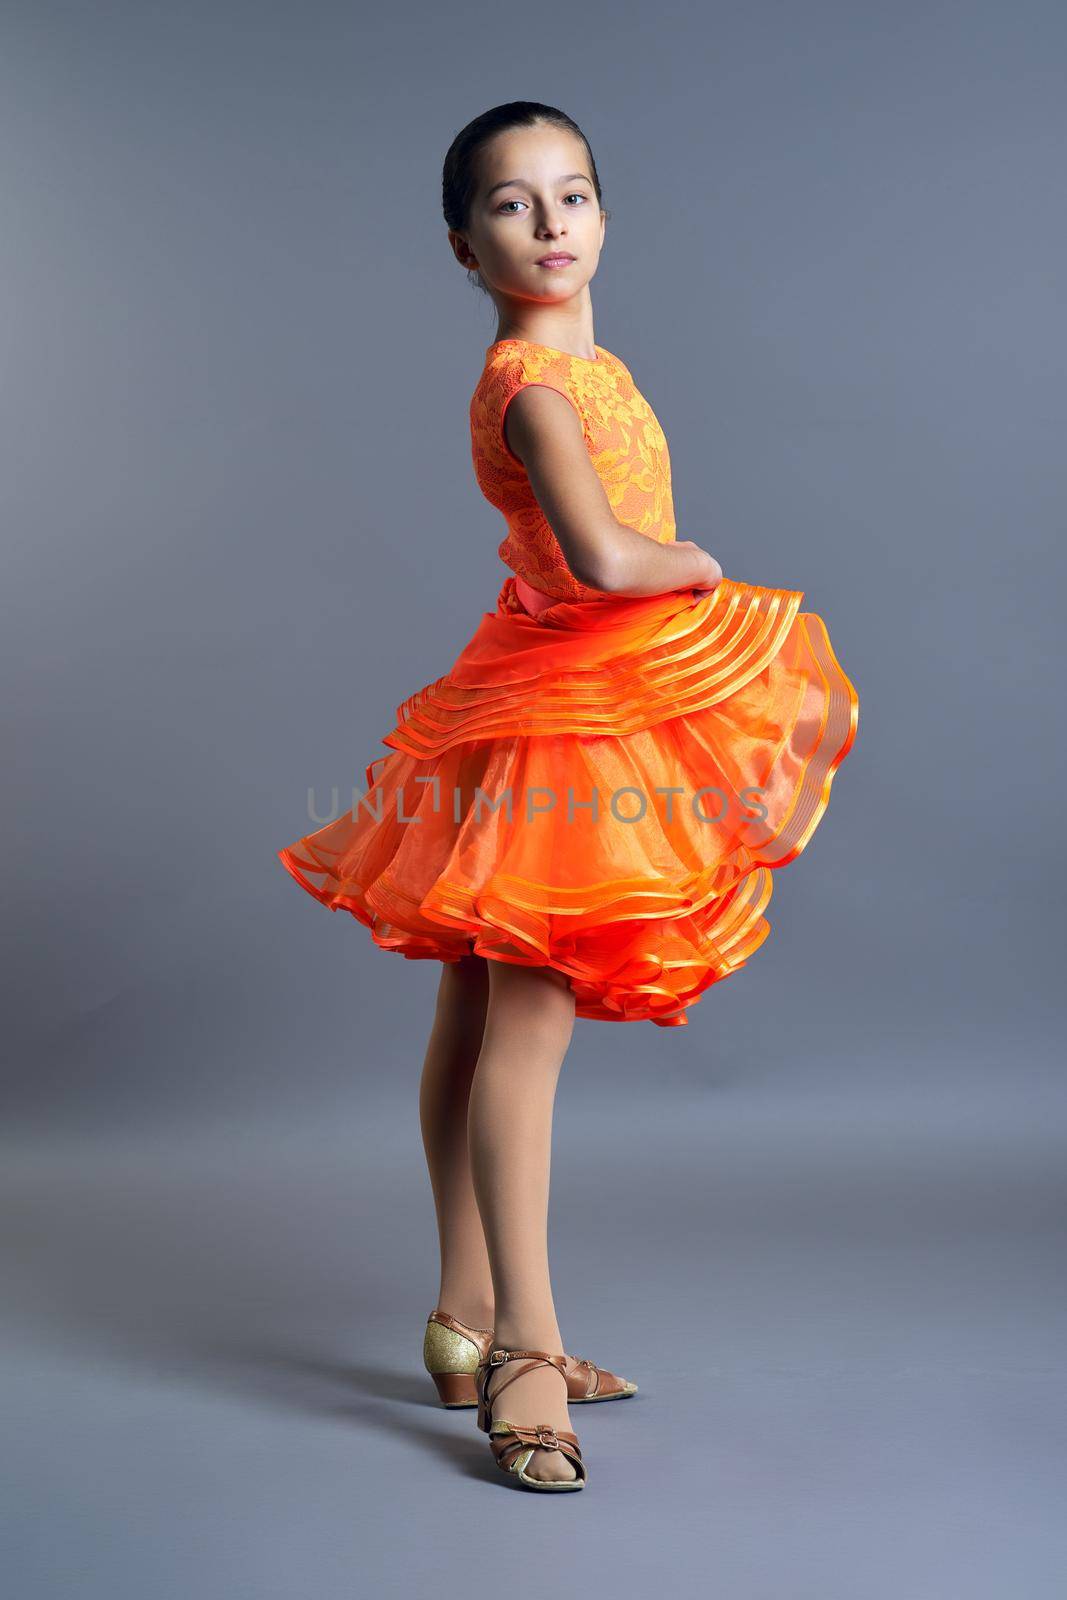 Kids sport dancing, kid girl in orange sport dress posing by VH-studio